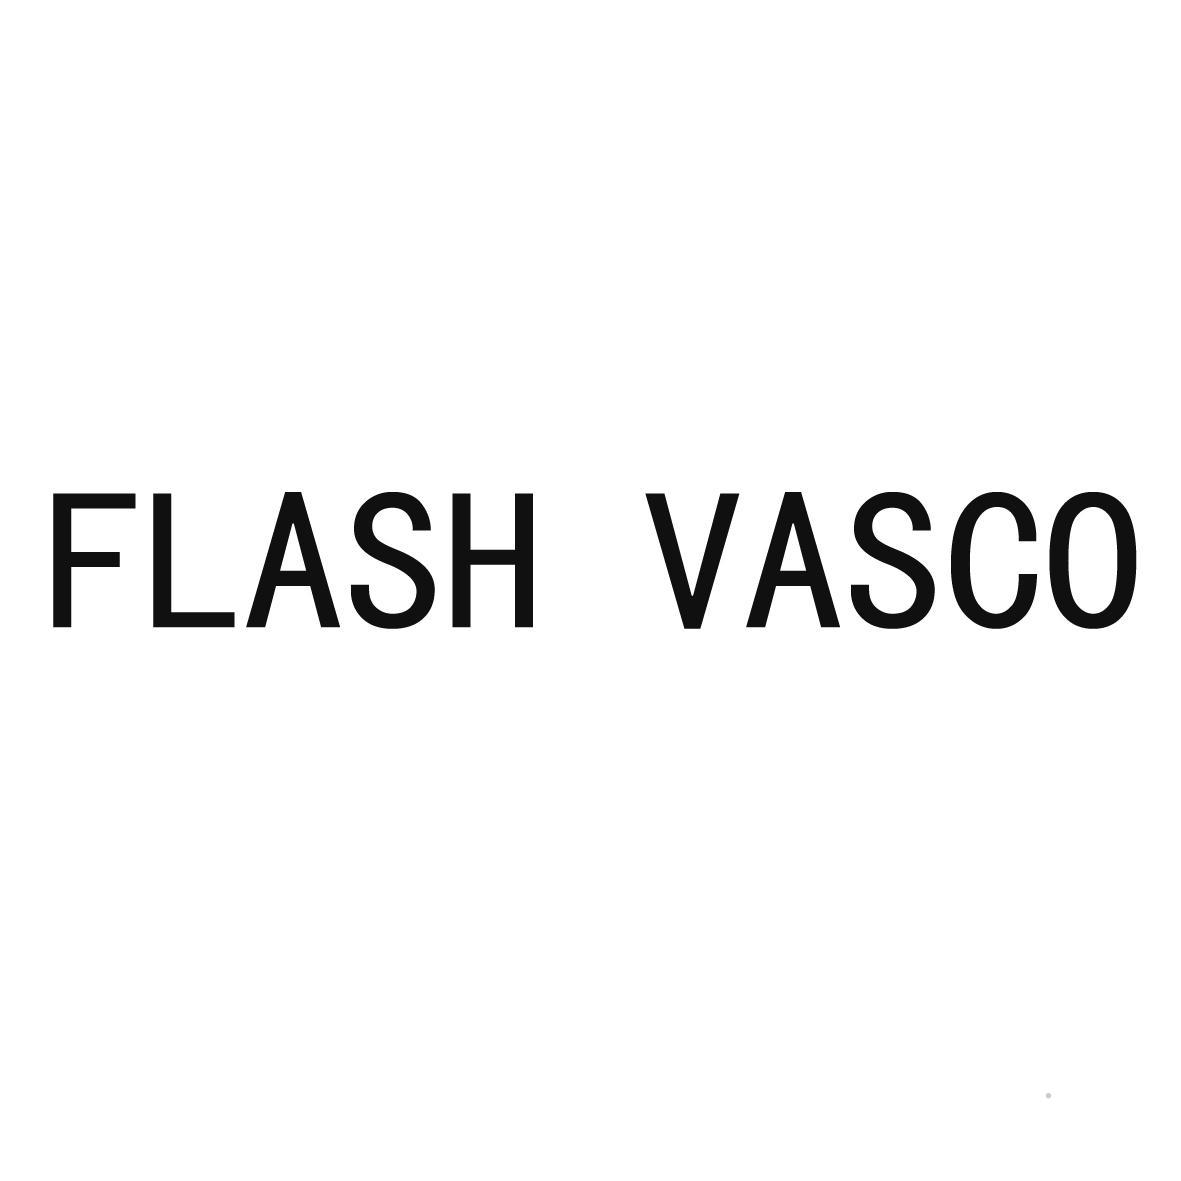 FLASH VASCO